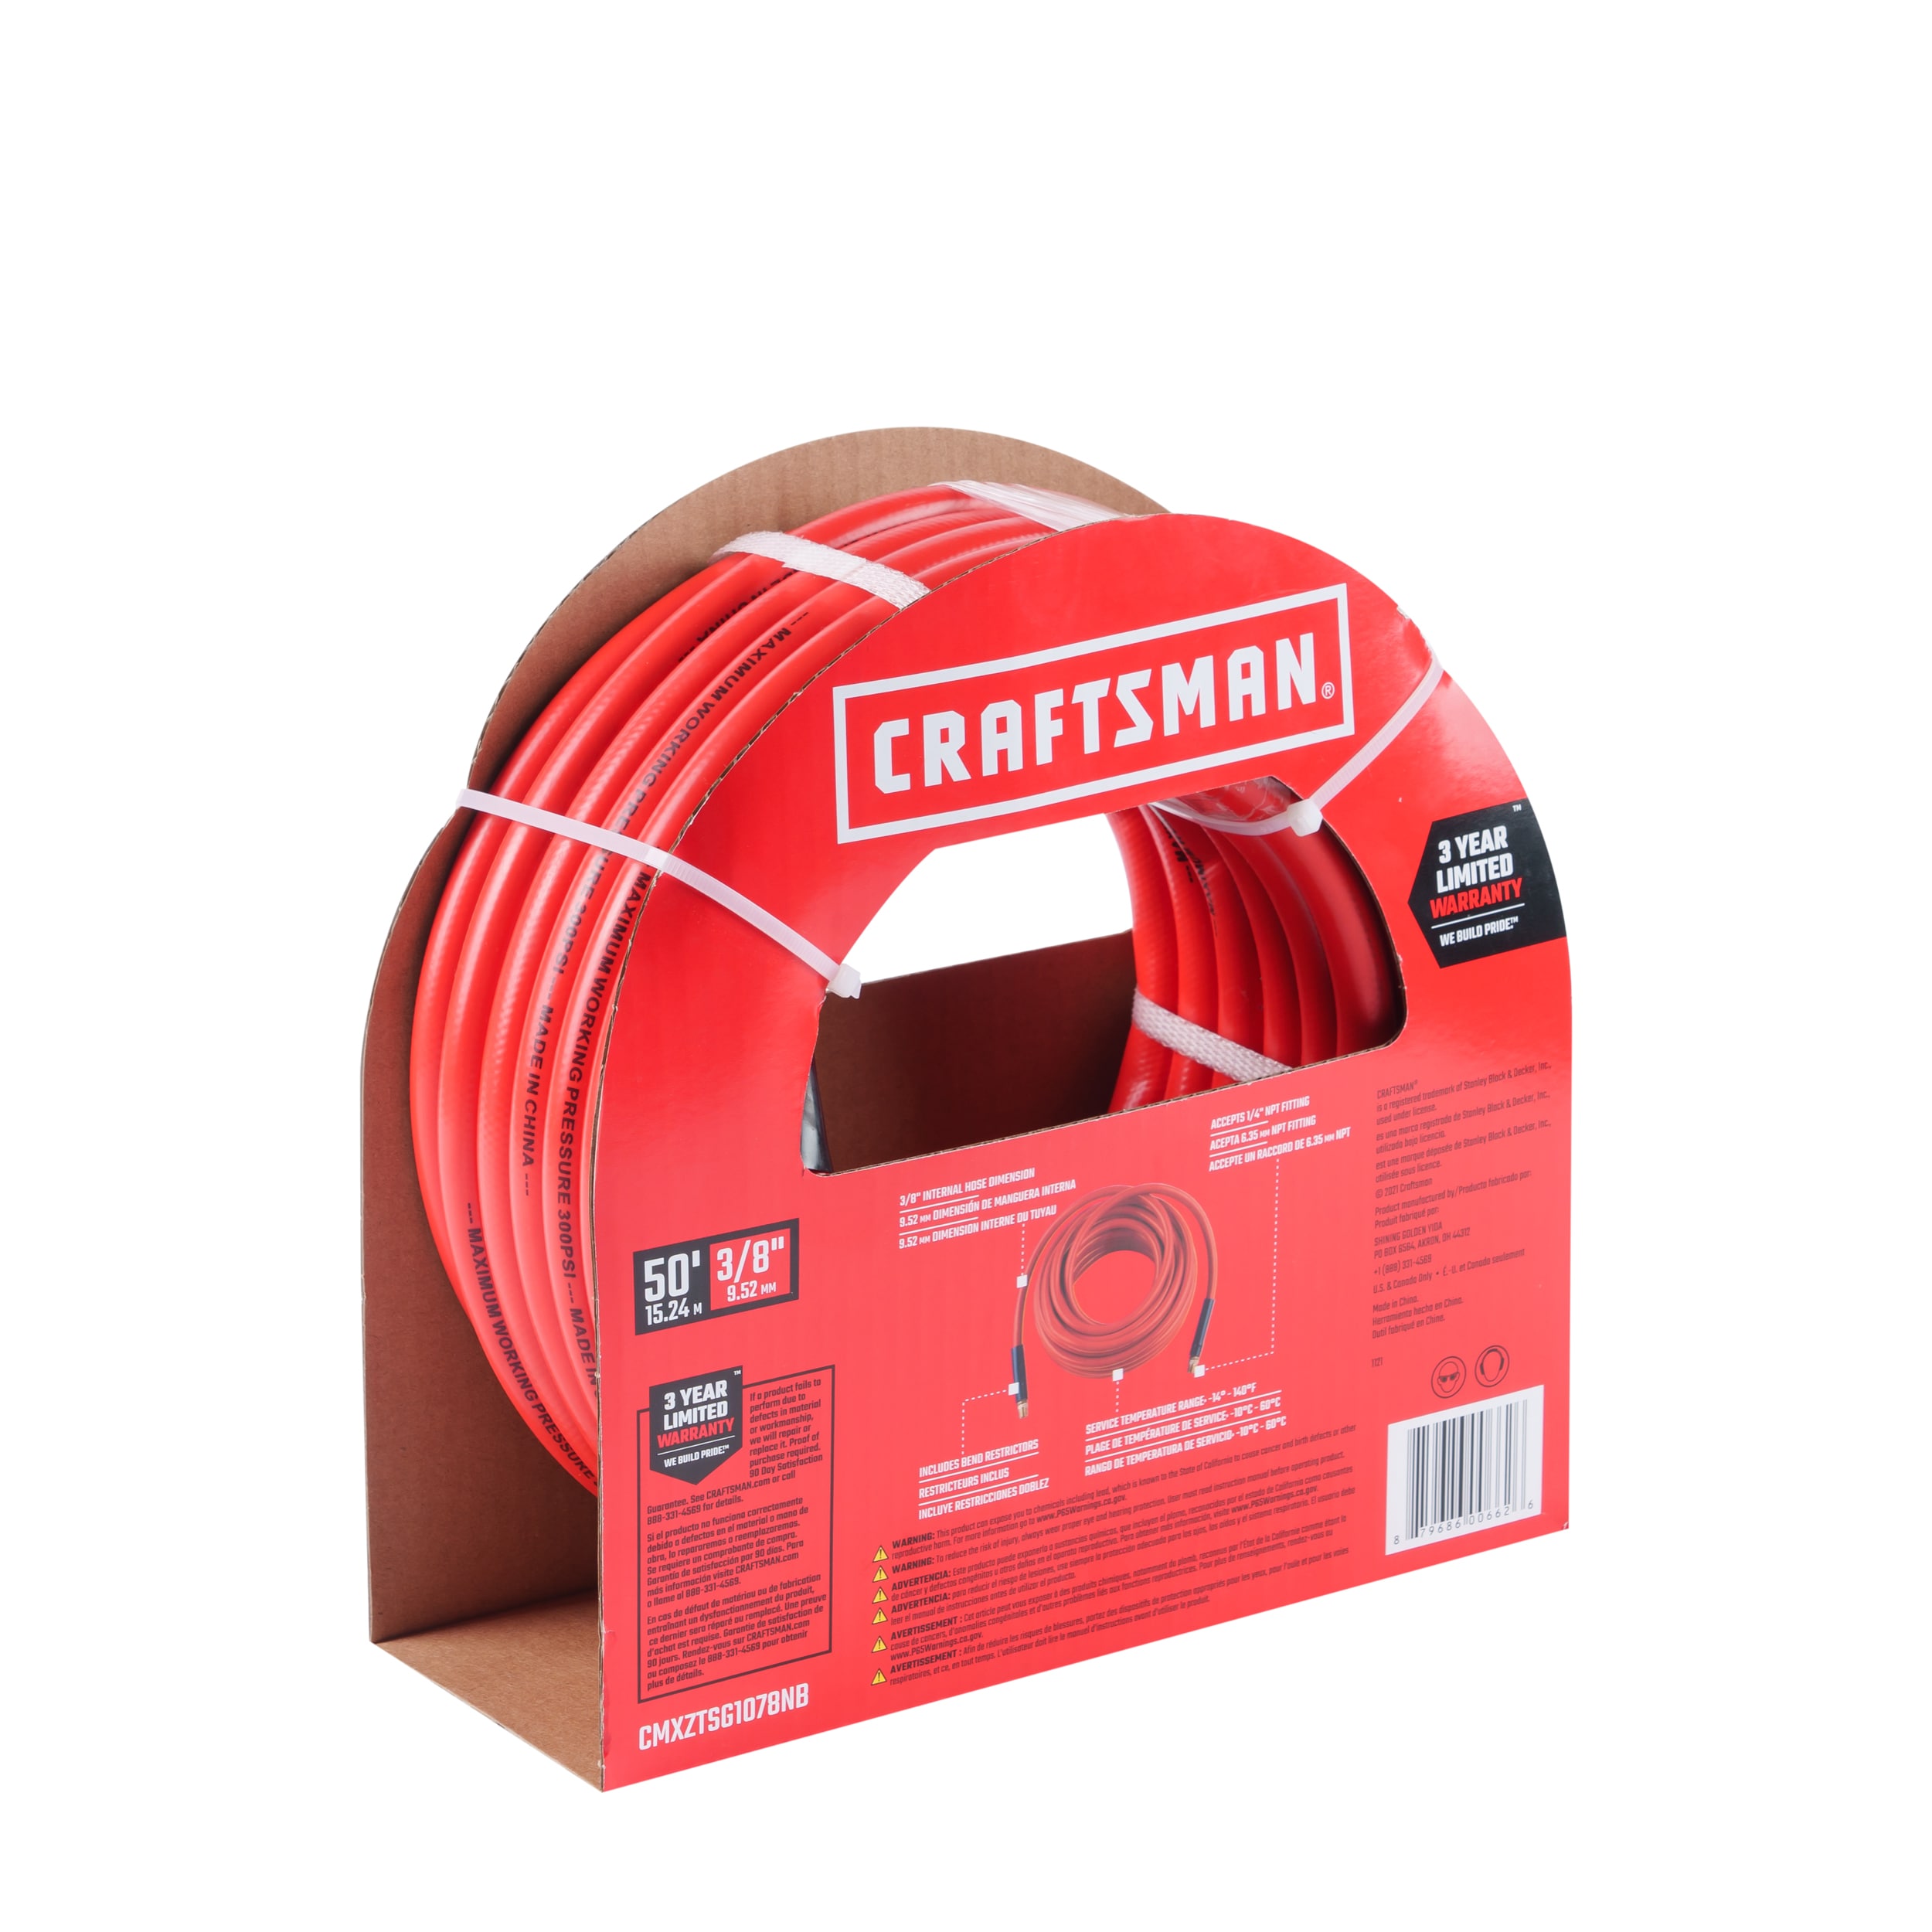 CRAFTSMAN Craftsman 3/8-in 50-Ft PVC Air Hose in the Air